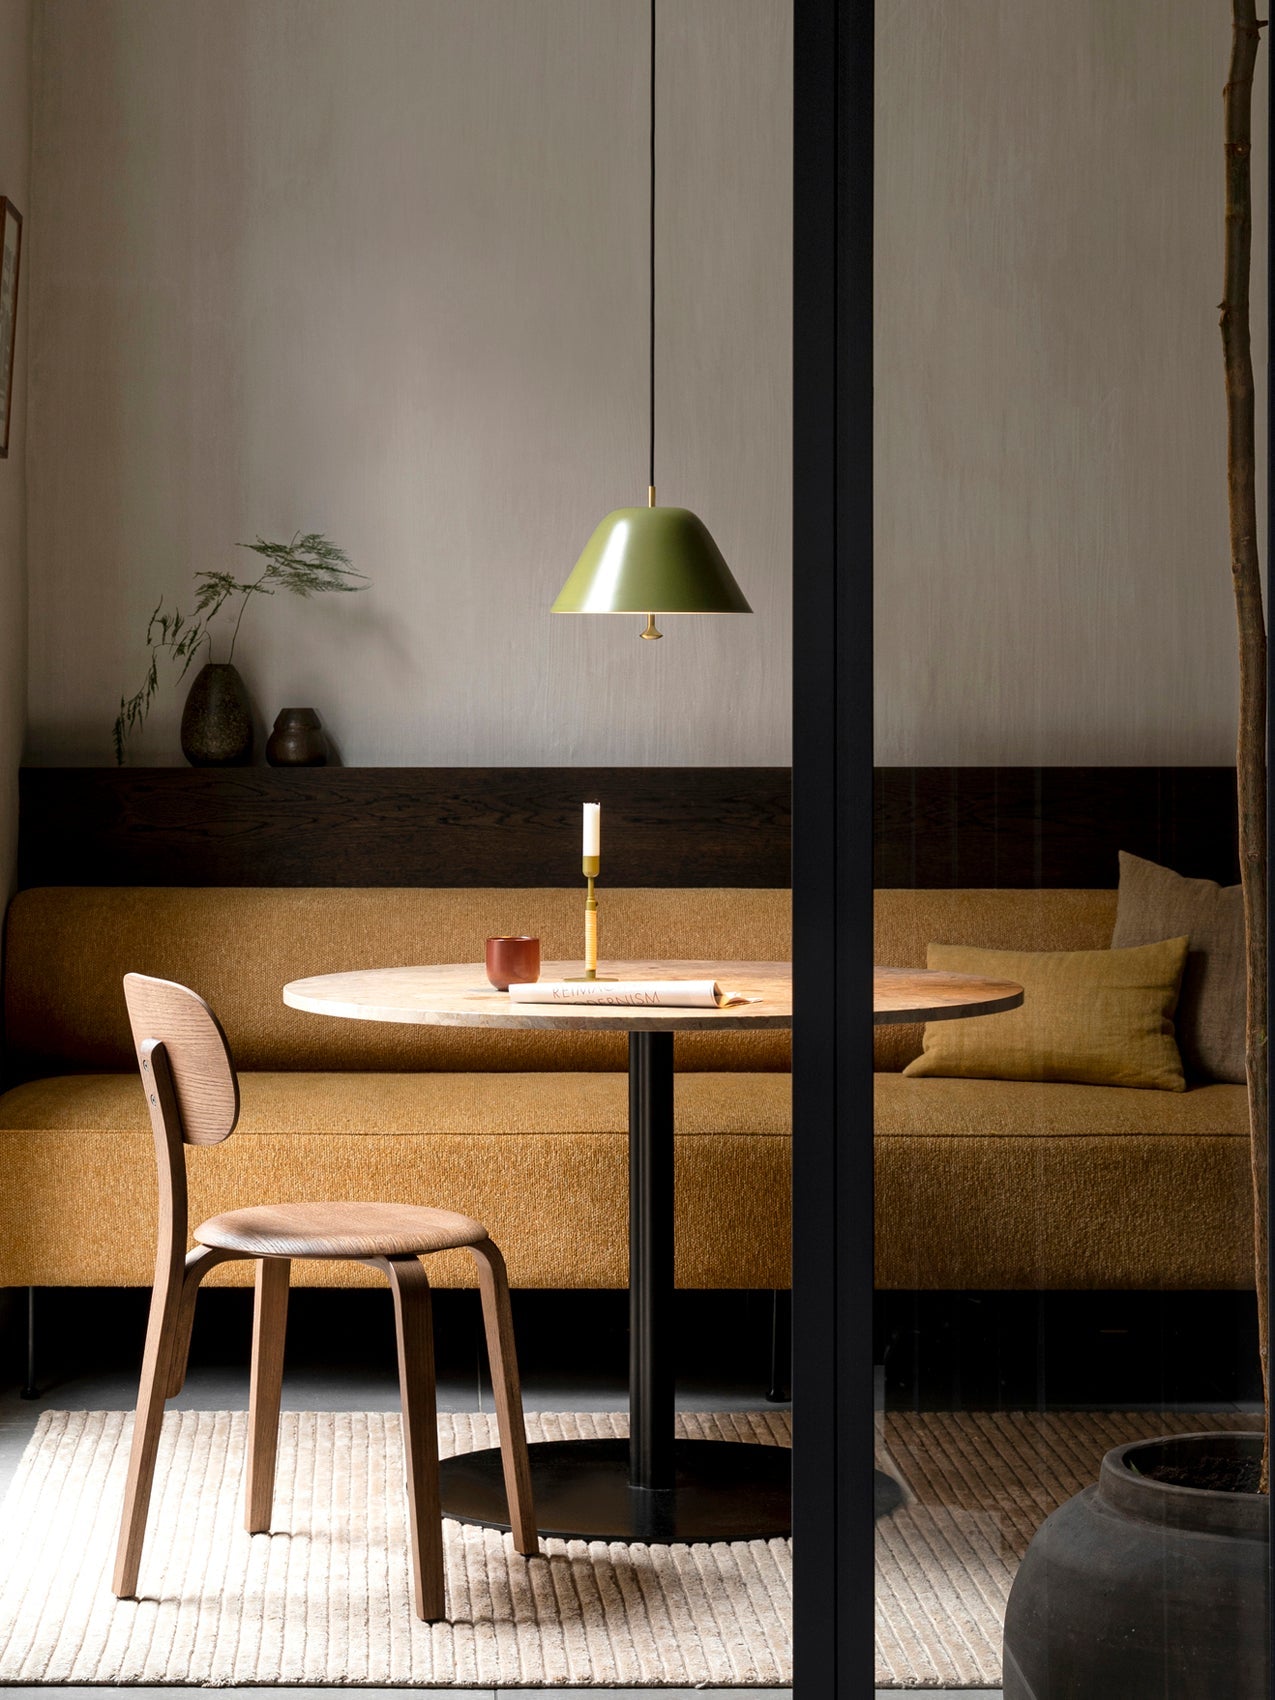 Simple Asymmetrical Coffee Table Build Plans - Houseful of Handmade